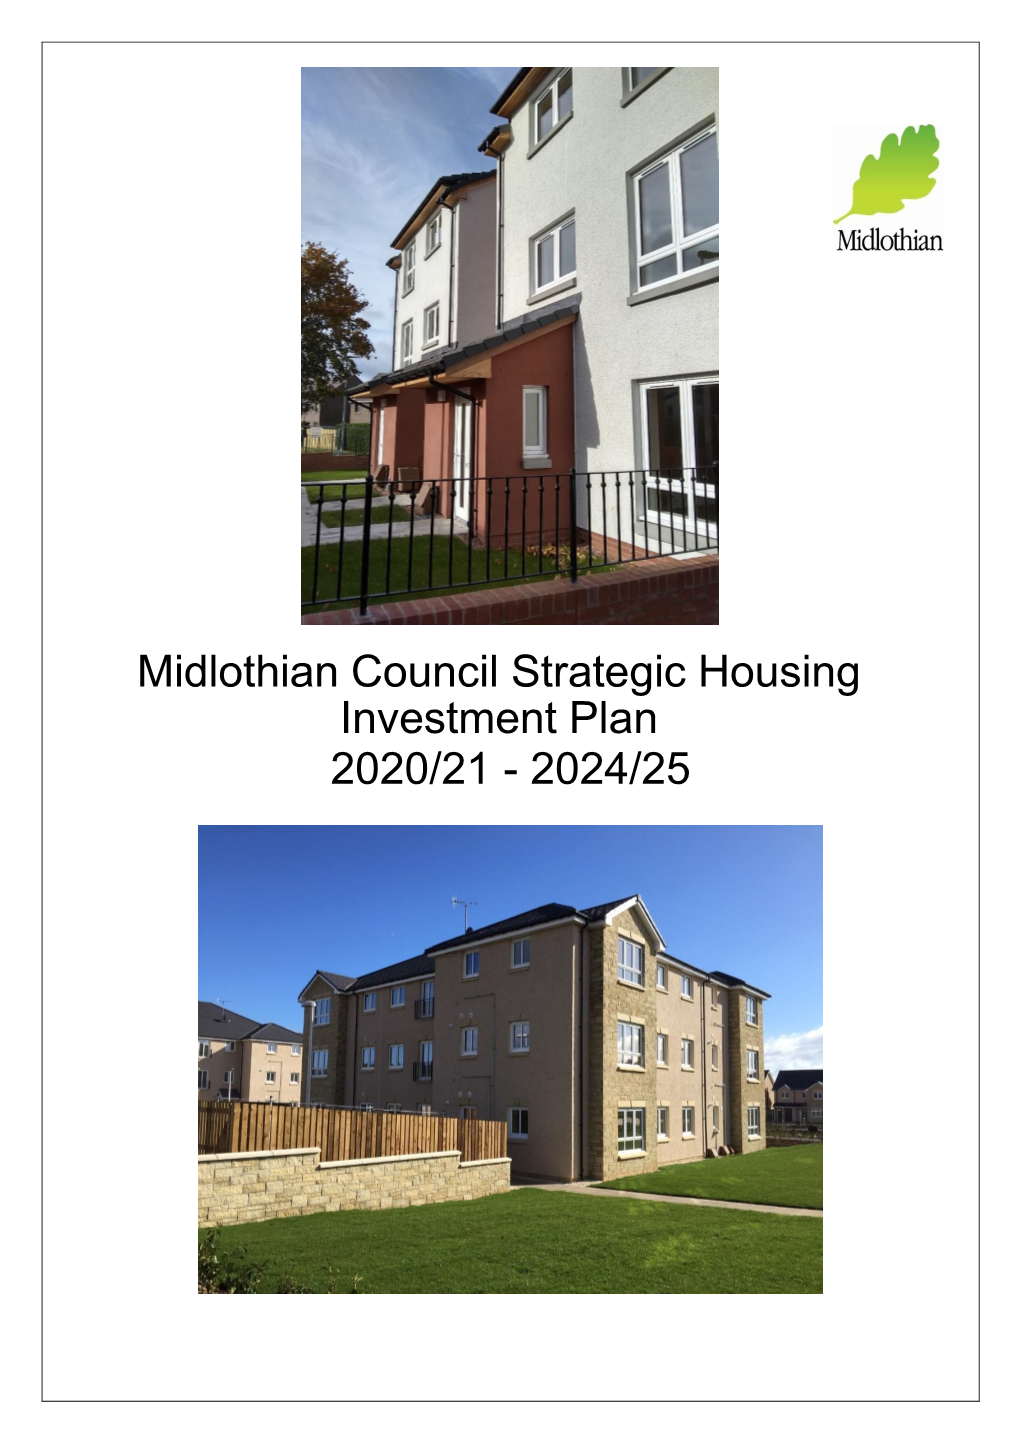 Midlothian Council Strategic Housing Investment Plan 2020/21 - 2024/25